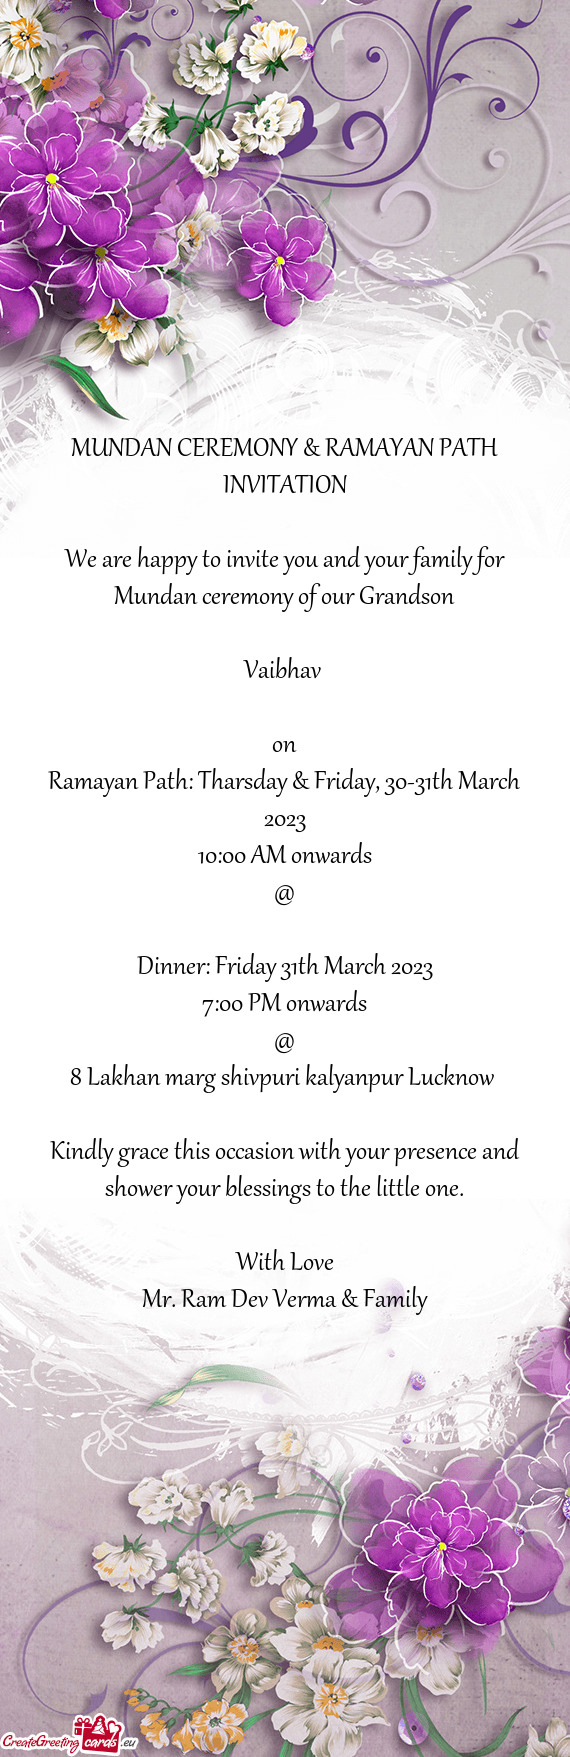 Ramayan Path: Tharsday & Friday, 30-31th March 2023